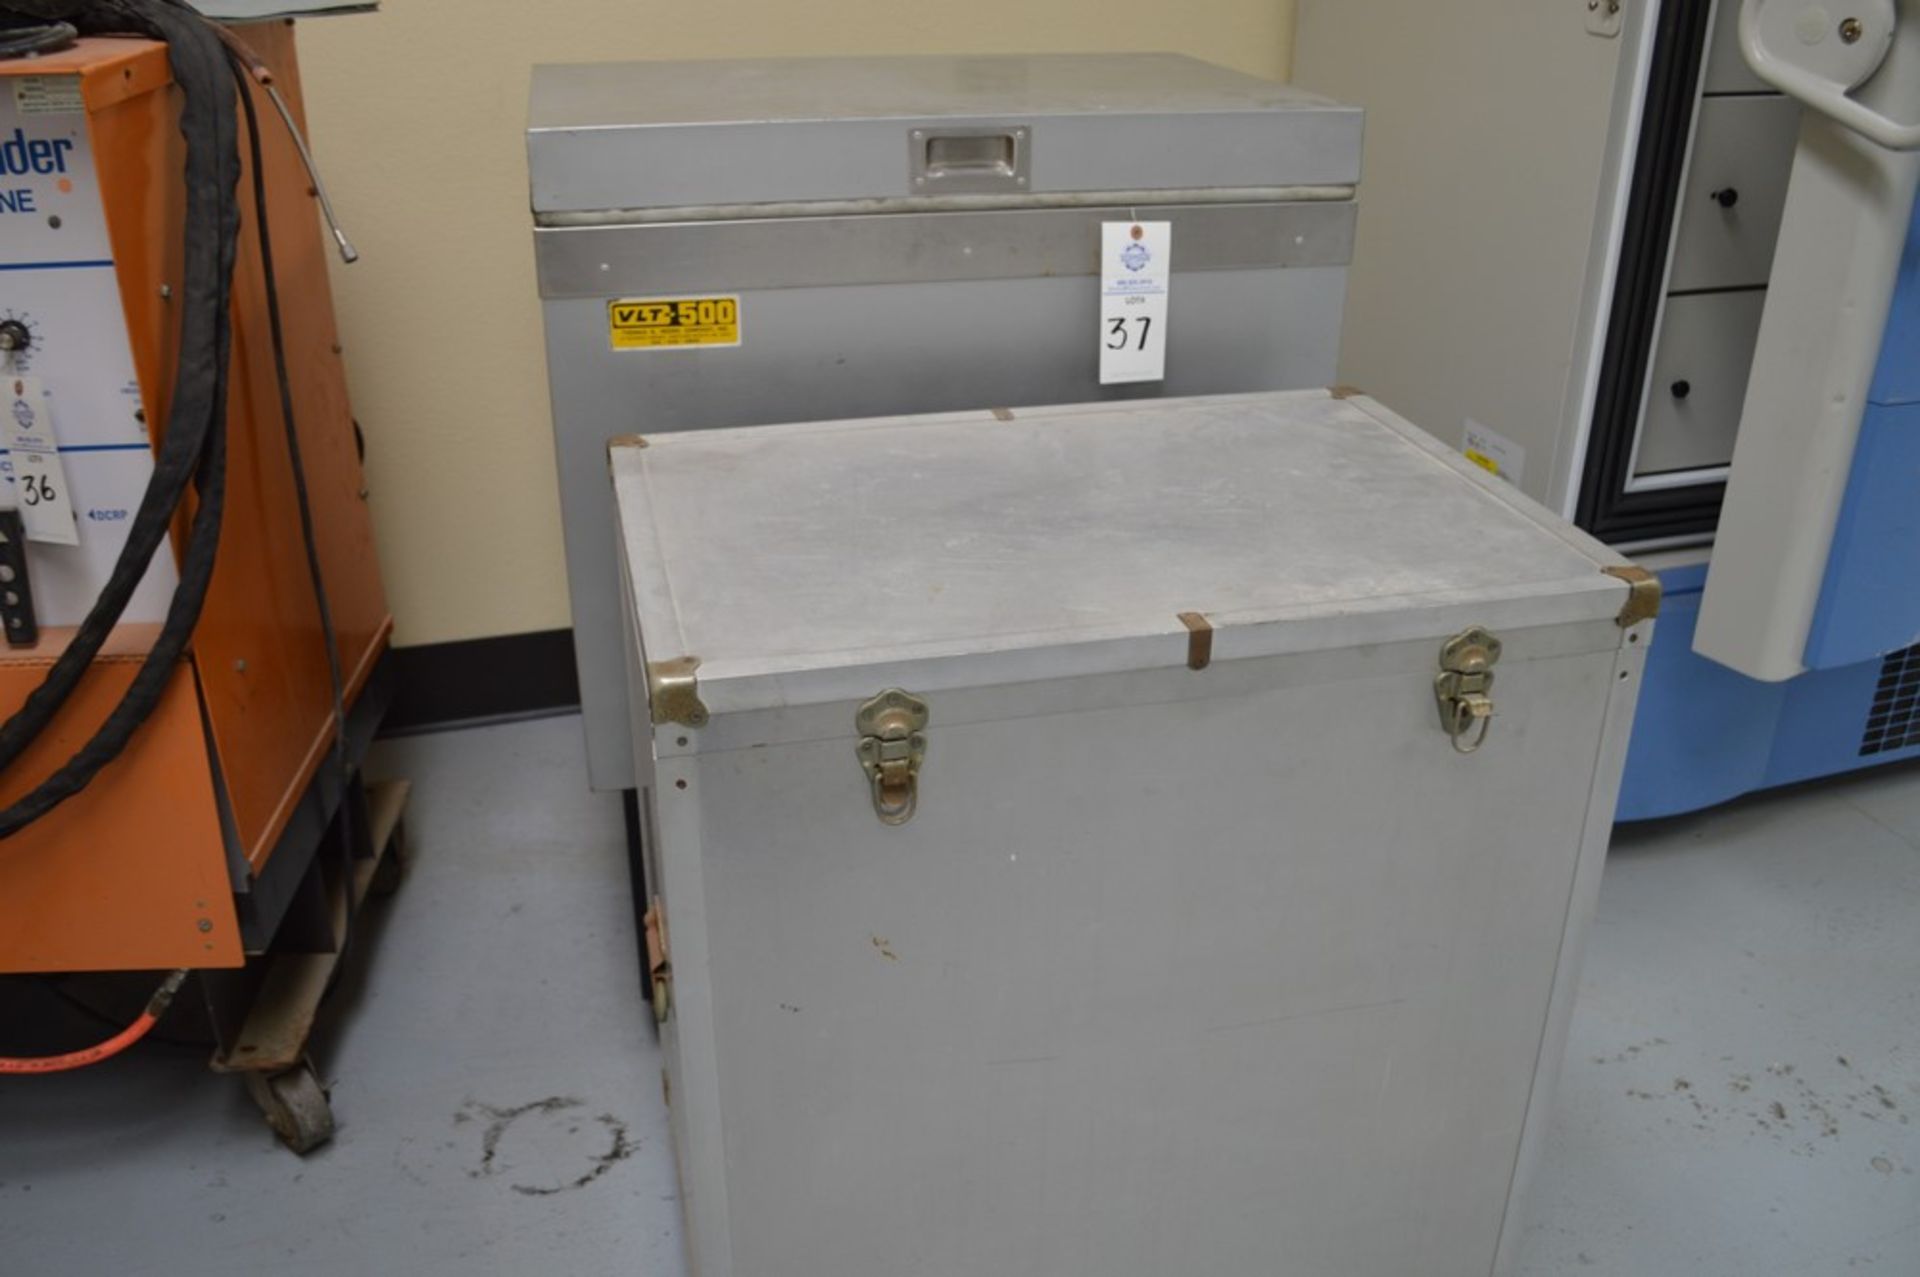 VTL-500 Dry Ice Deep Freezer, internal tub 16 1/2 x 26 1/4" x 19 1/2" deep with extra metal jacketed